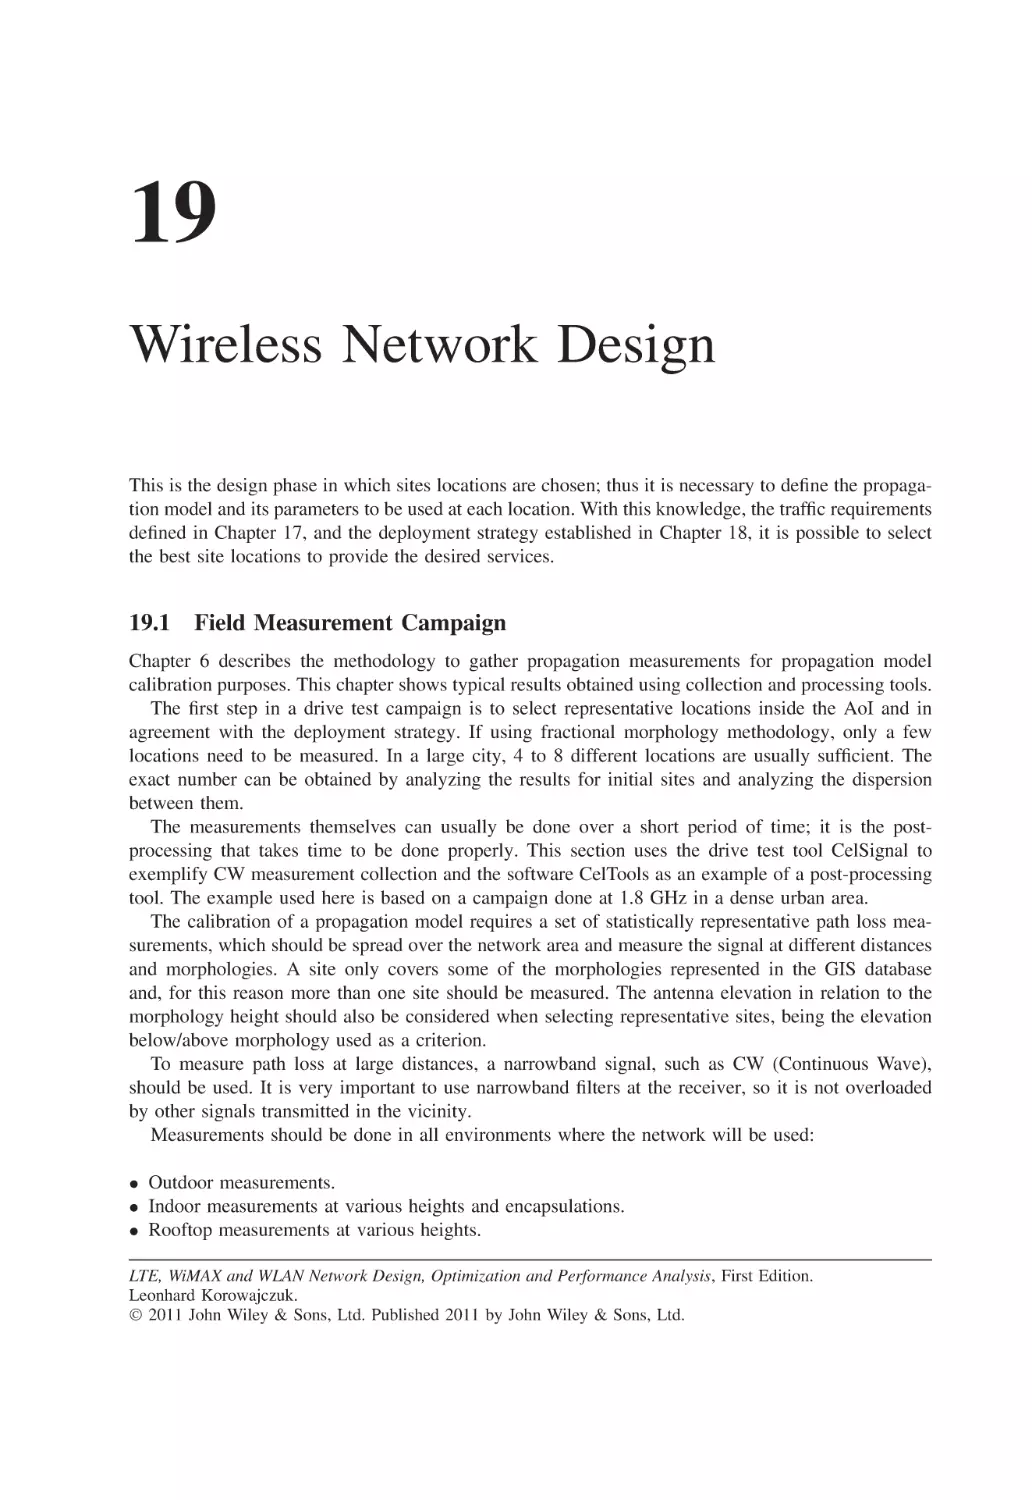 19 Wireless Network Design
19.1 Field Measurement Campaign